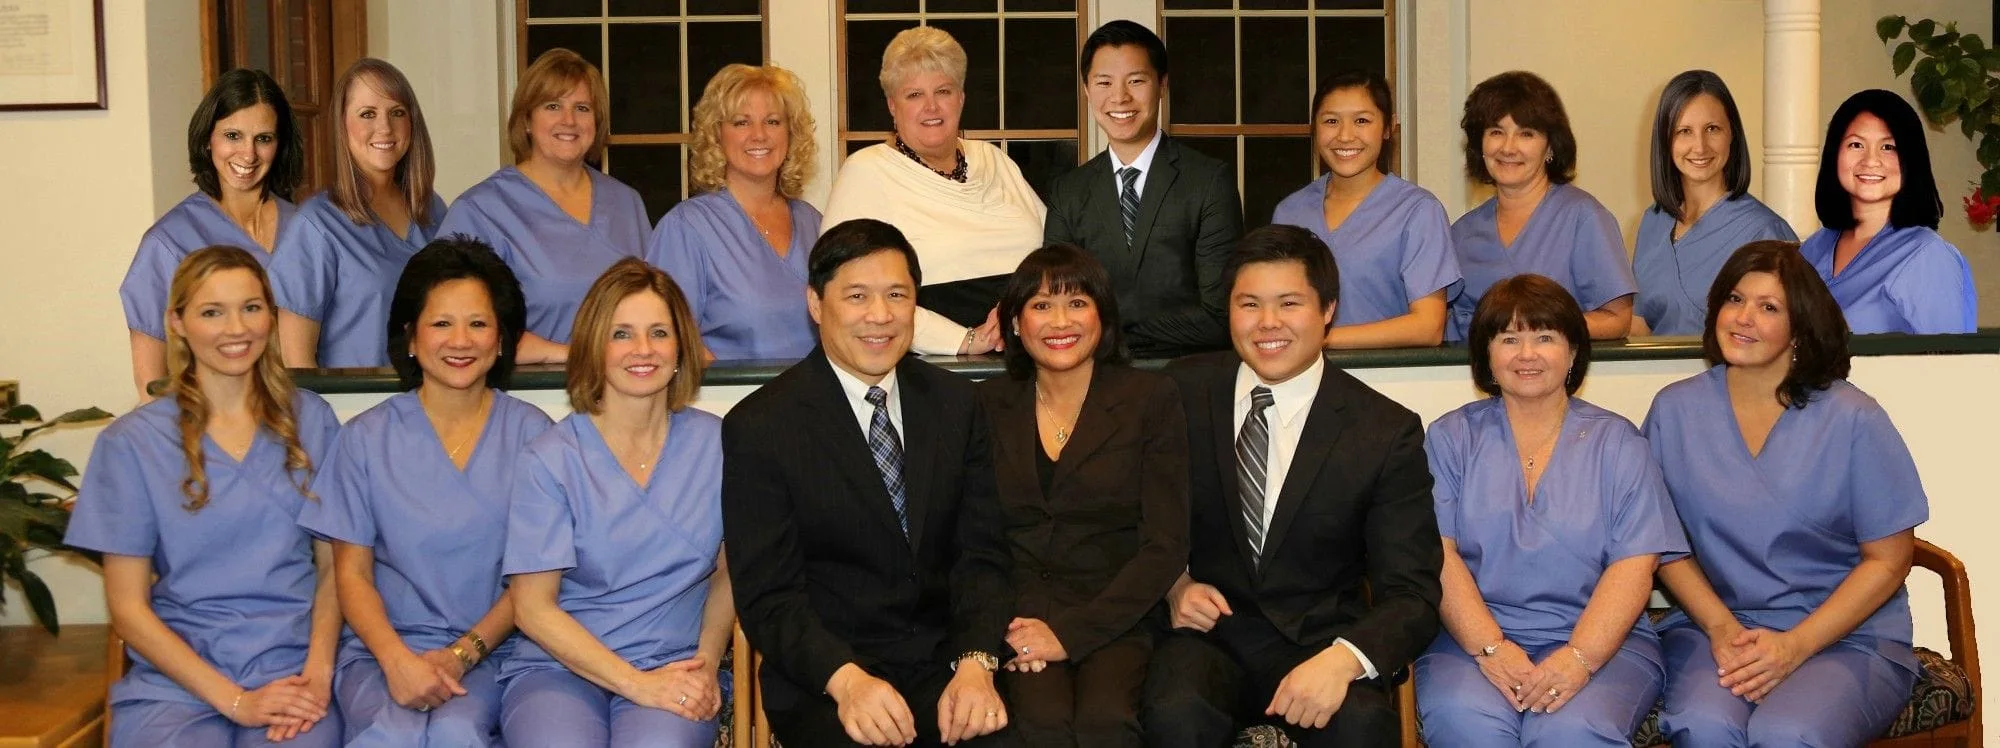 Pan Dental Care team in Melrose, MA